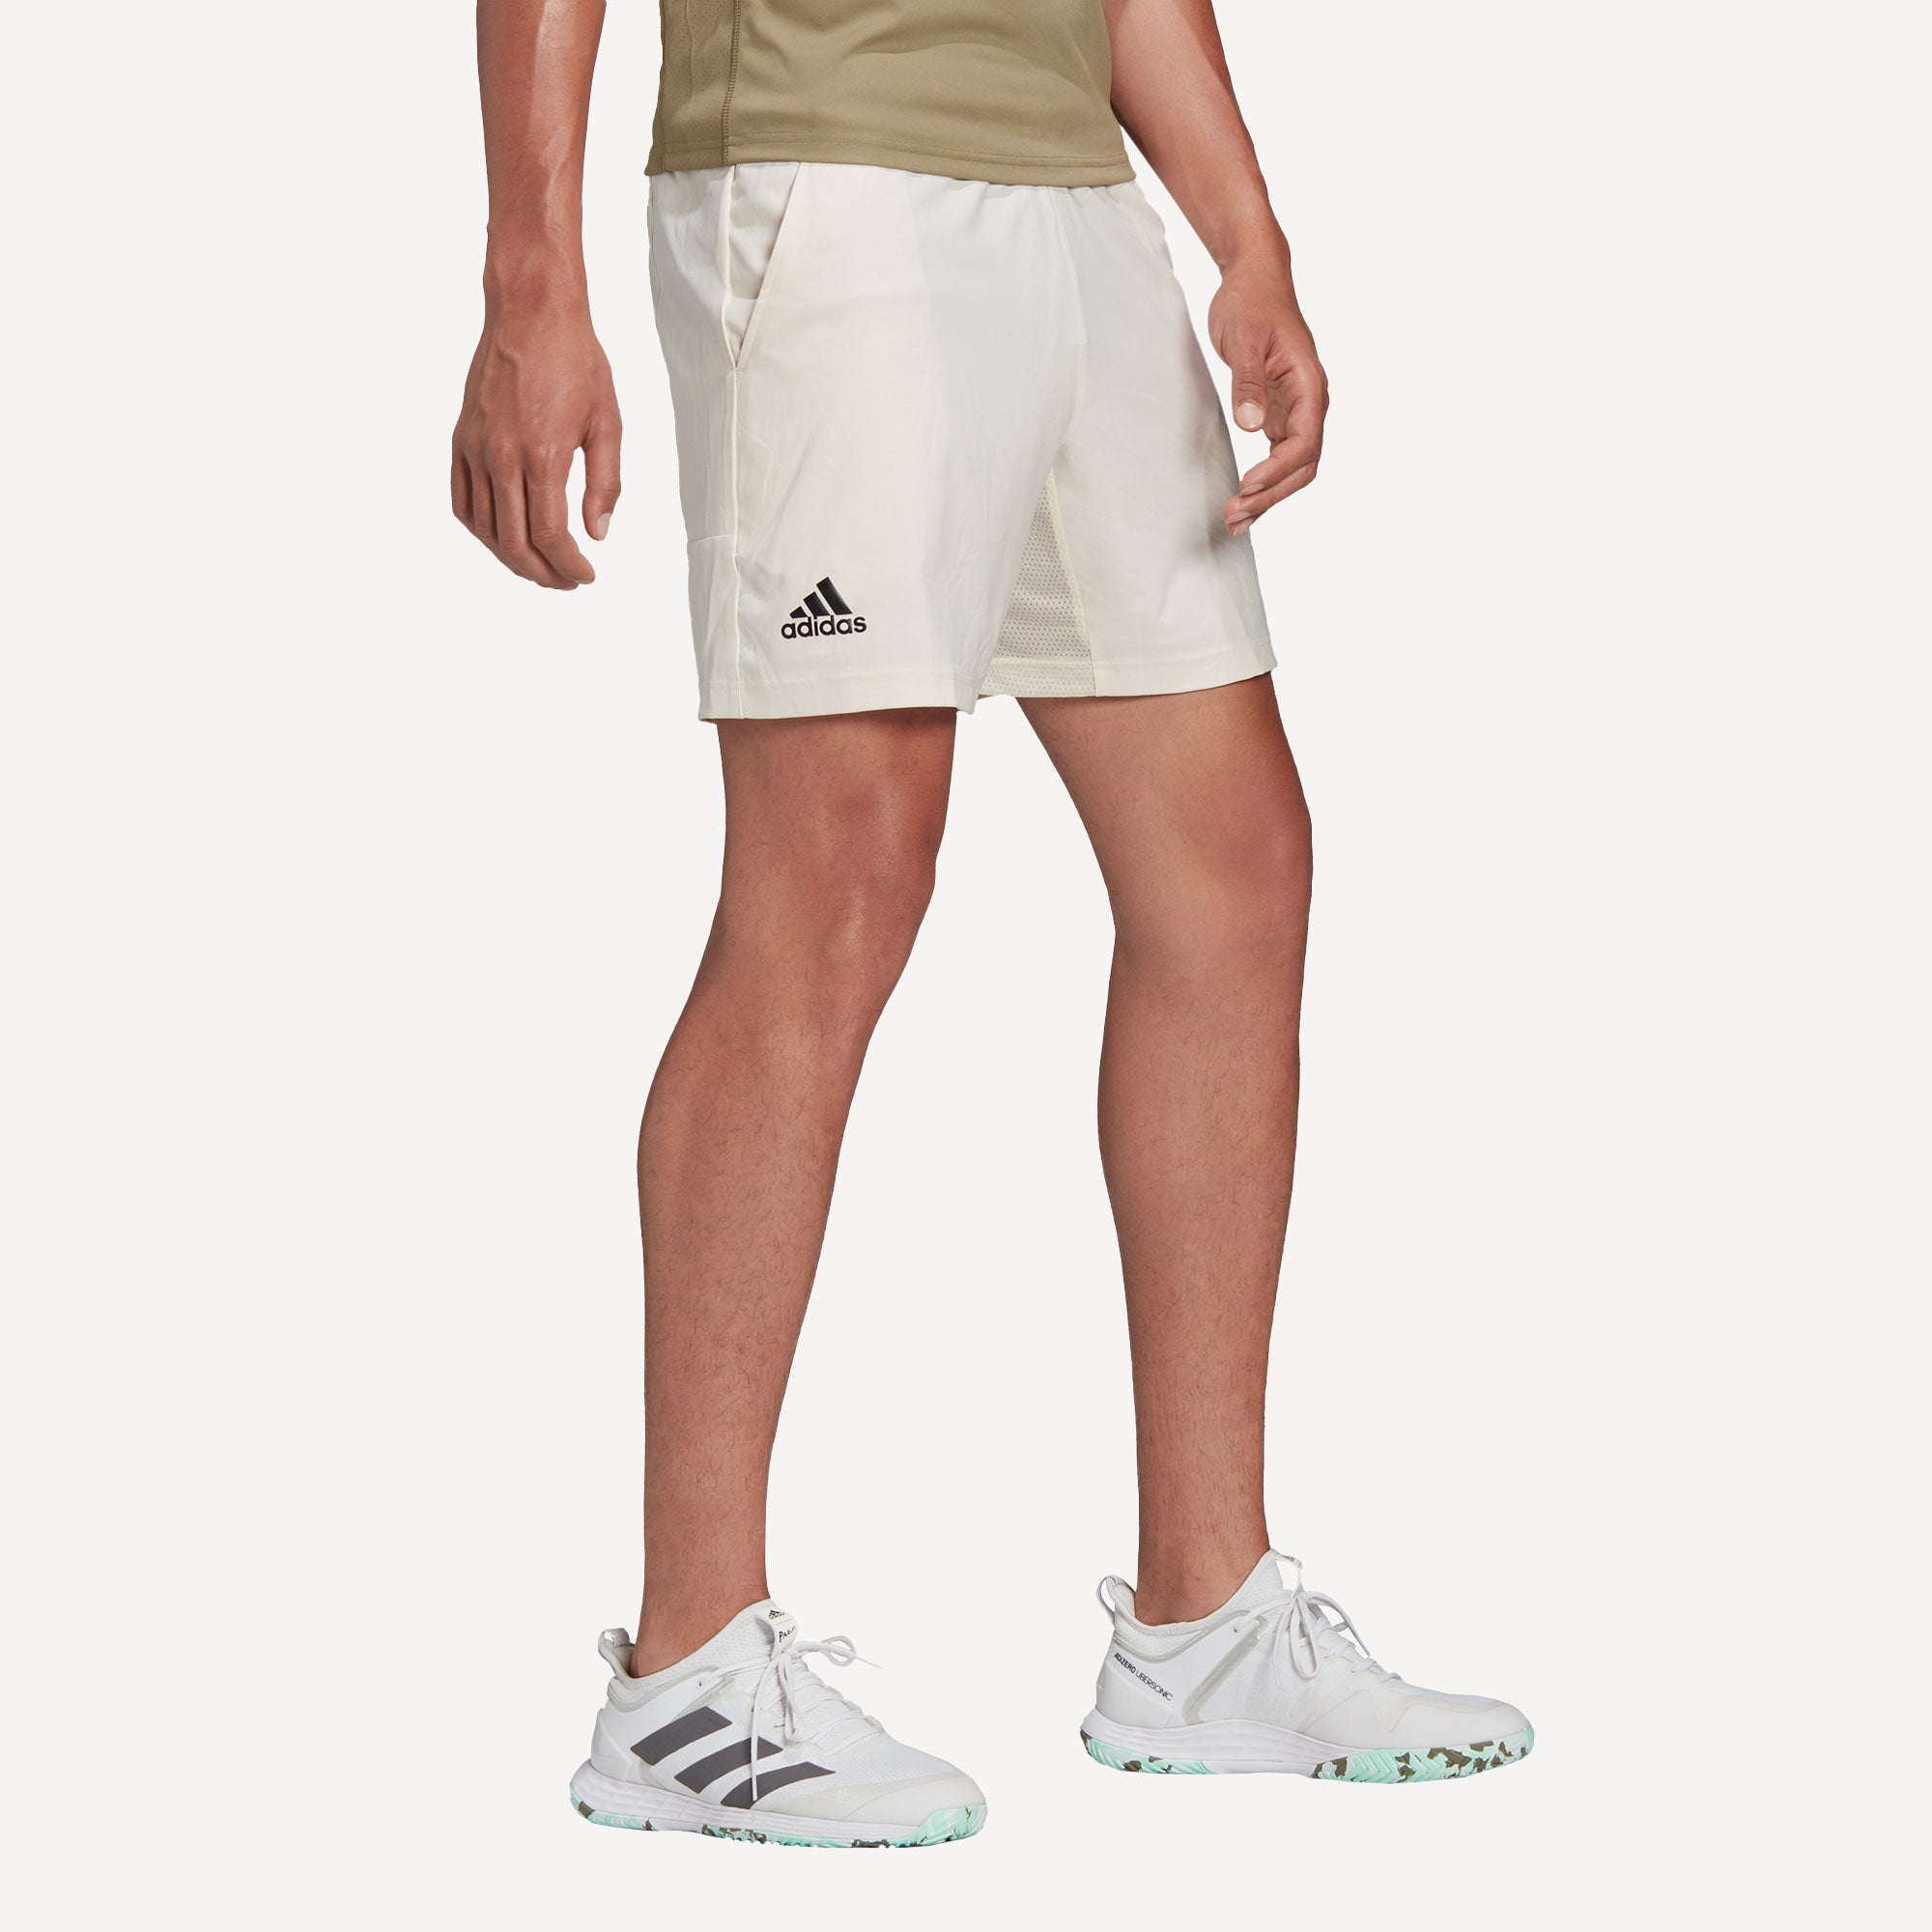 adidas Ergo Primeblue Men's 7-Inch Tennis Shorts White (3)